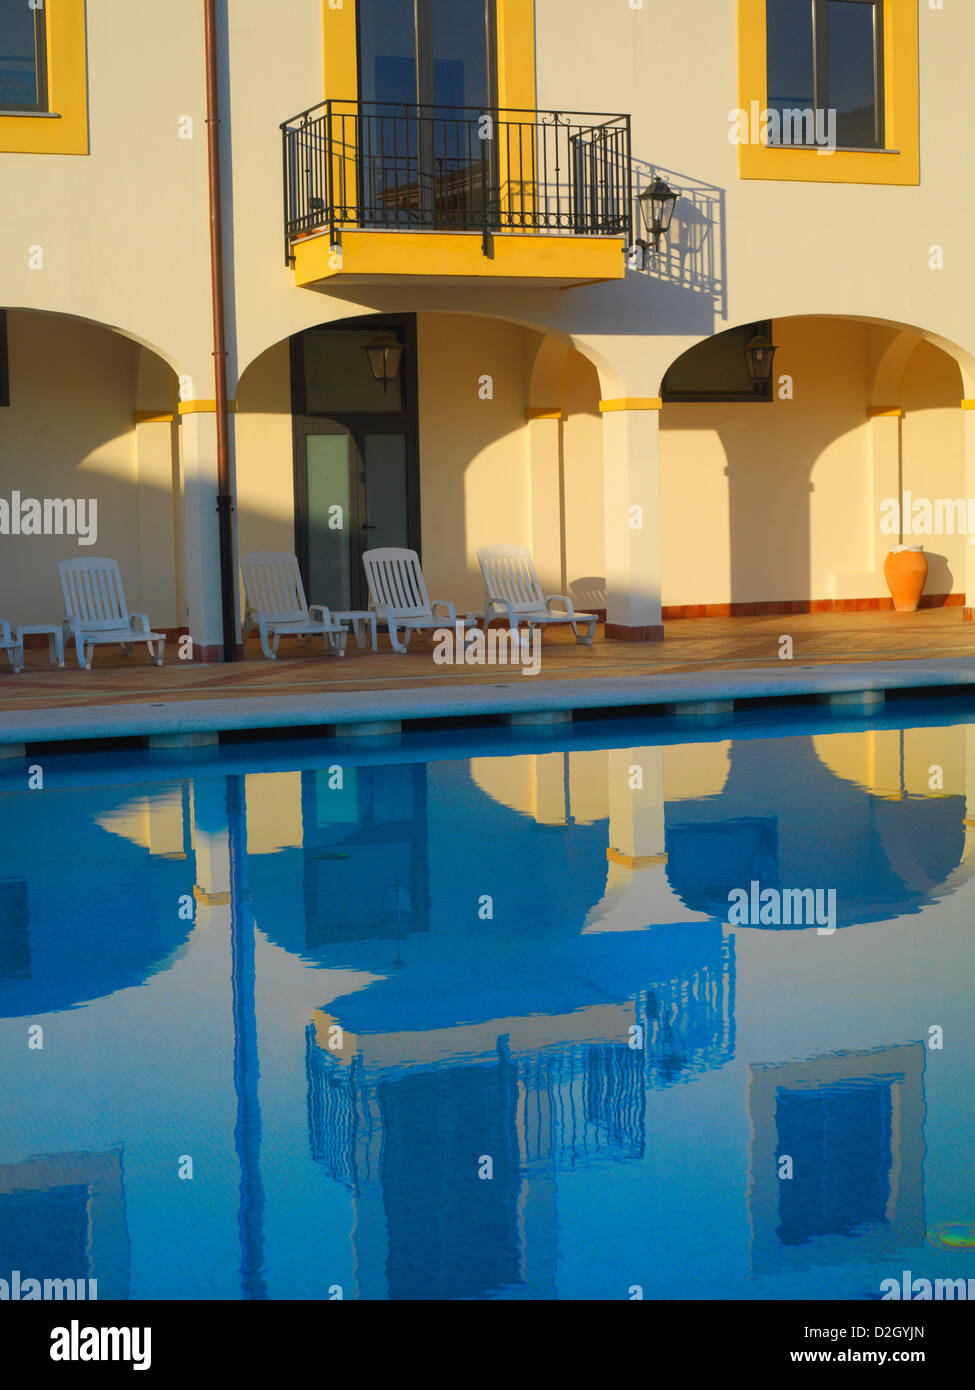 Palermo Sicily Italy Genoardo Park Hotel Swimming Pool Reflections Stock Photo